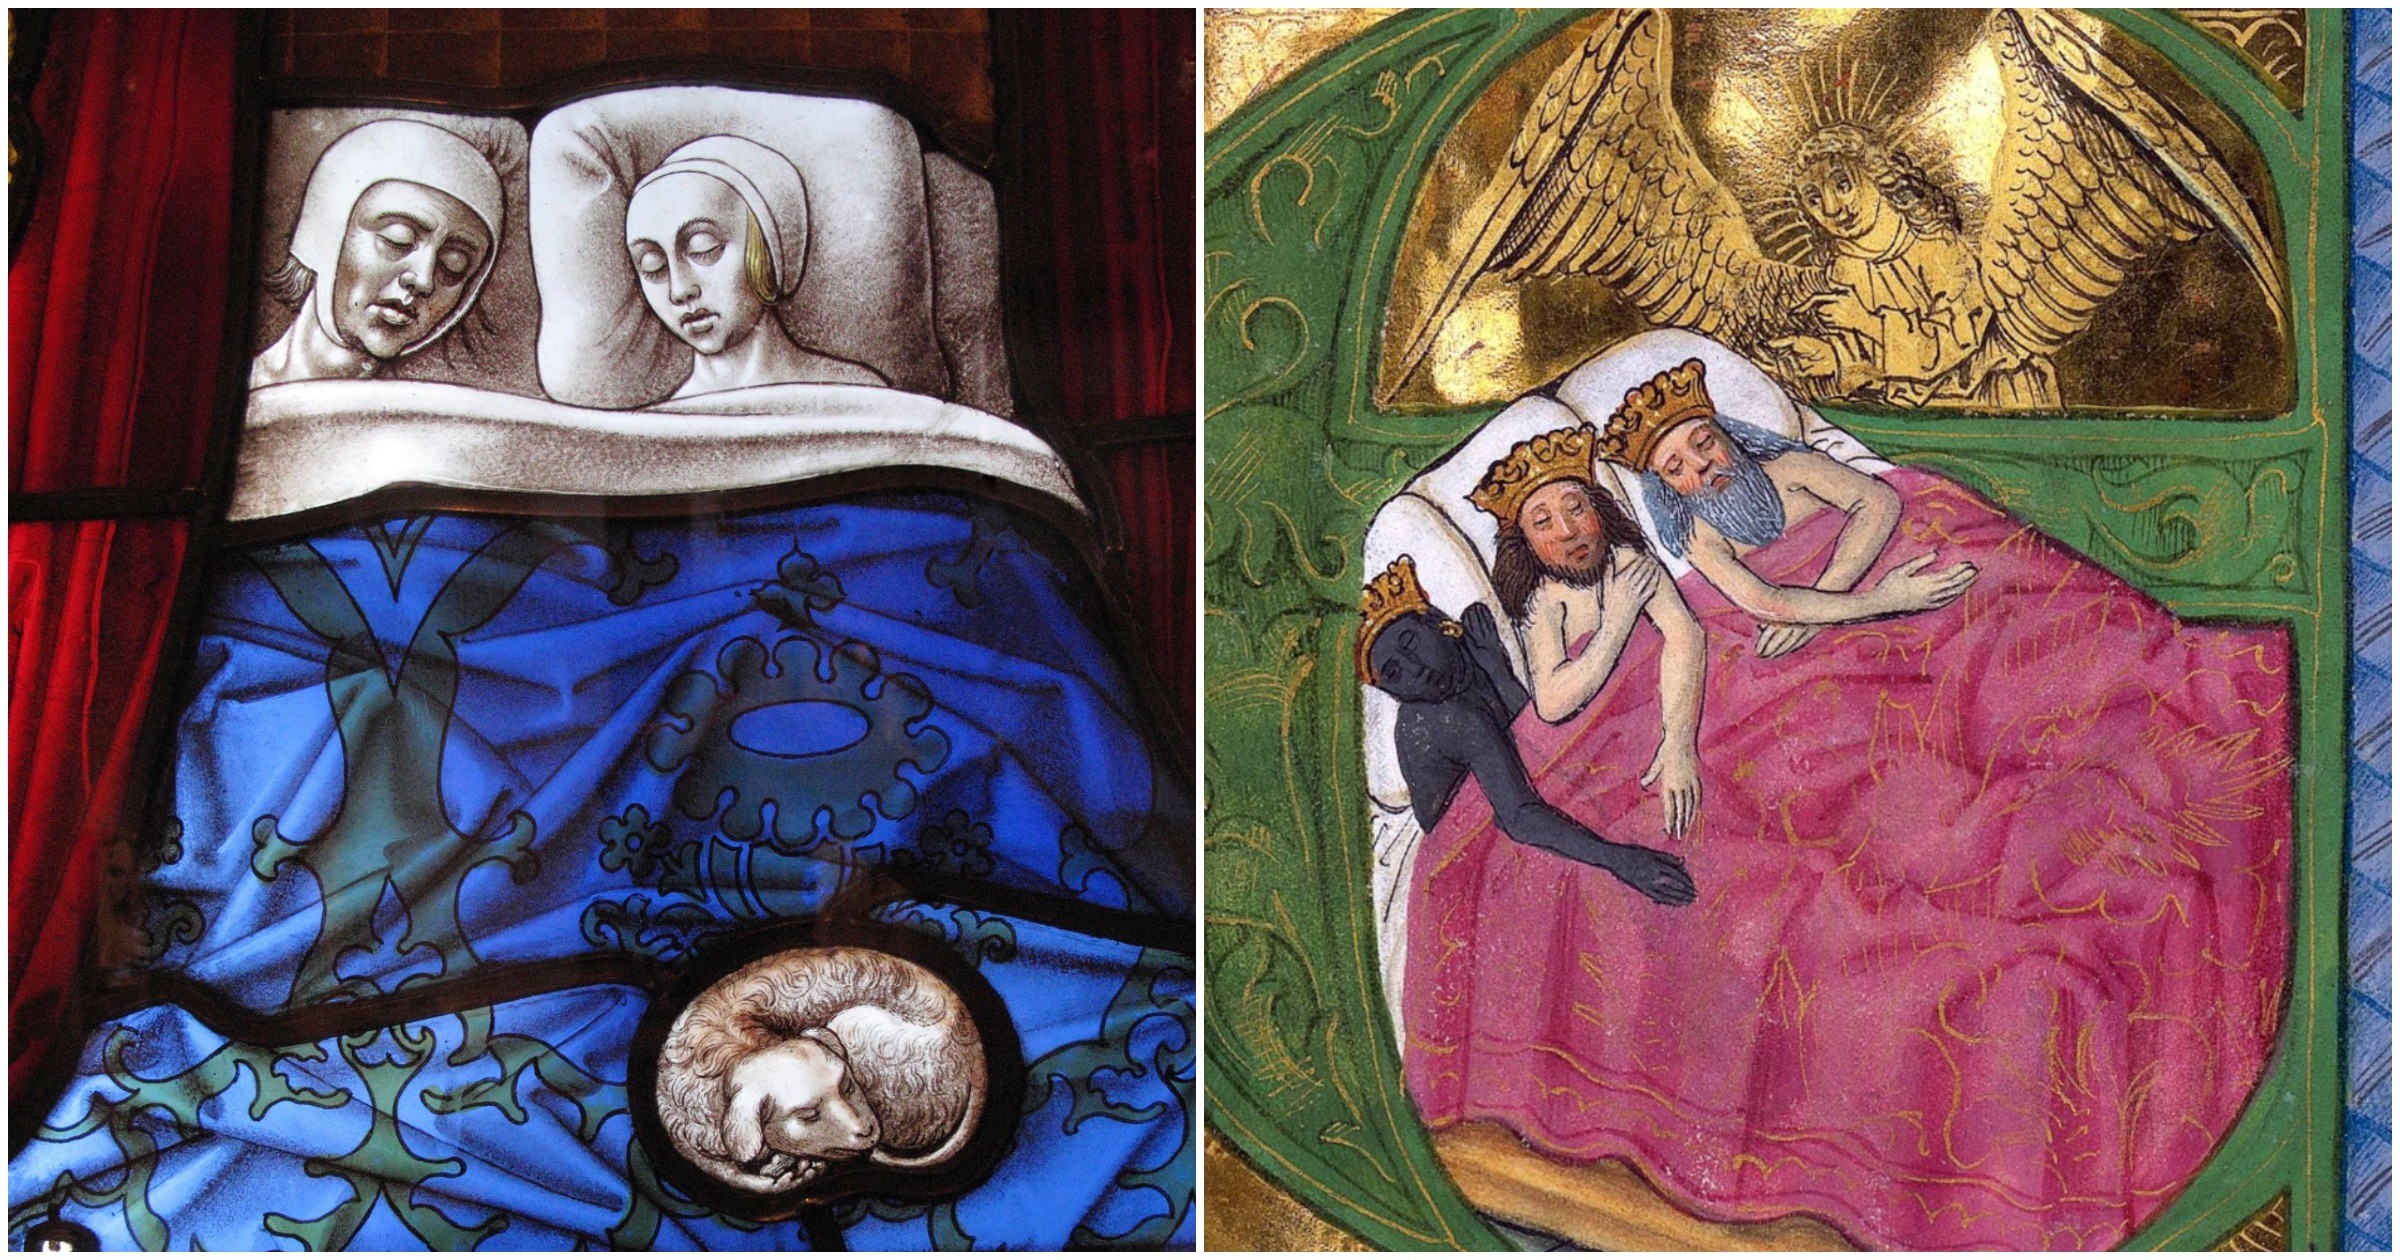 Спящие 2 х. Сон в средневековье. Сон в средние века. Спальник в средневековье.